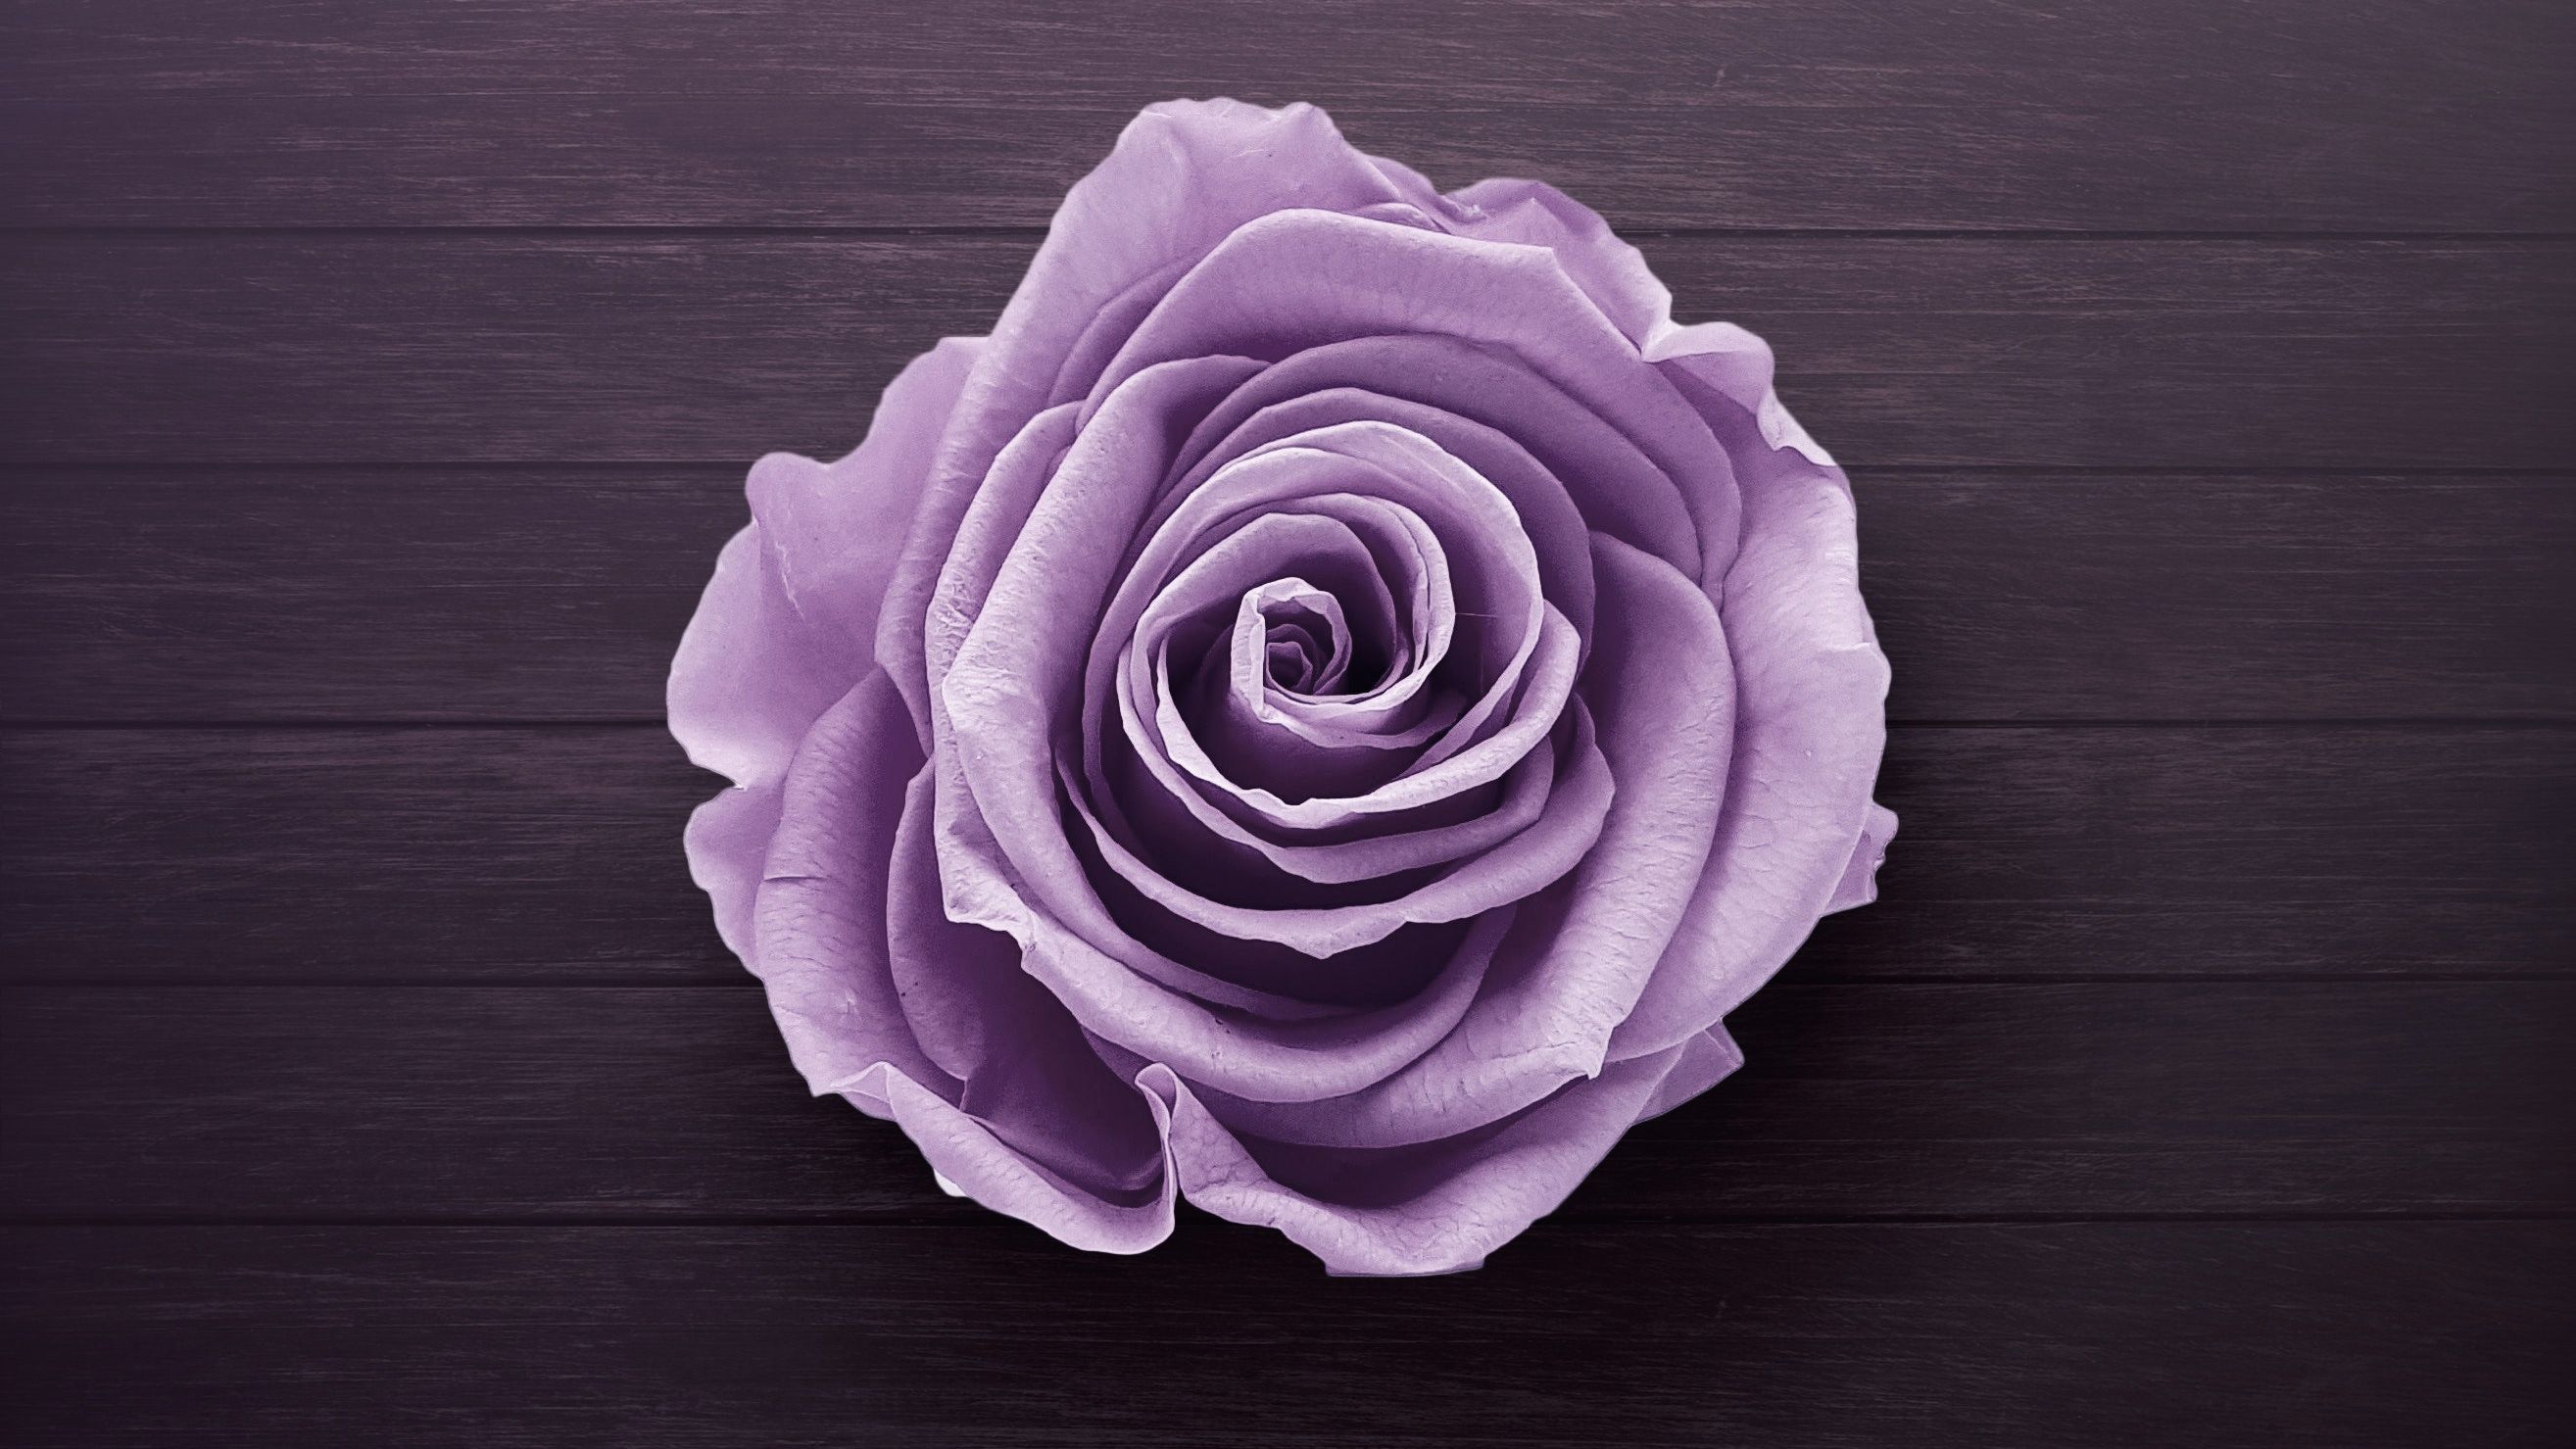 Purple Rose, HD Flowers, 4k Wallpaper, Image, Background